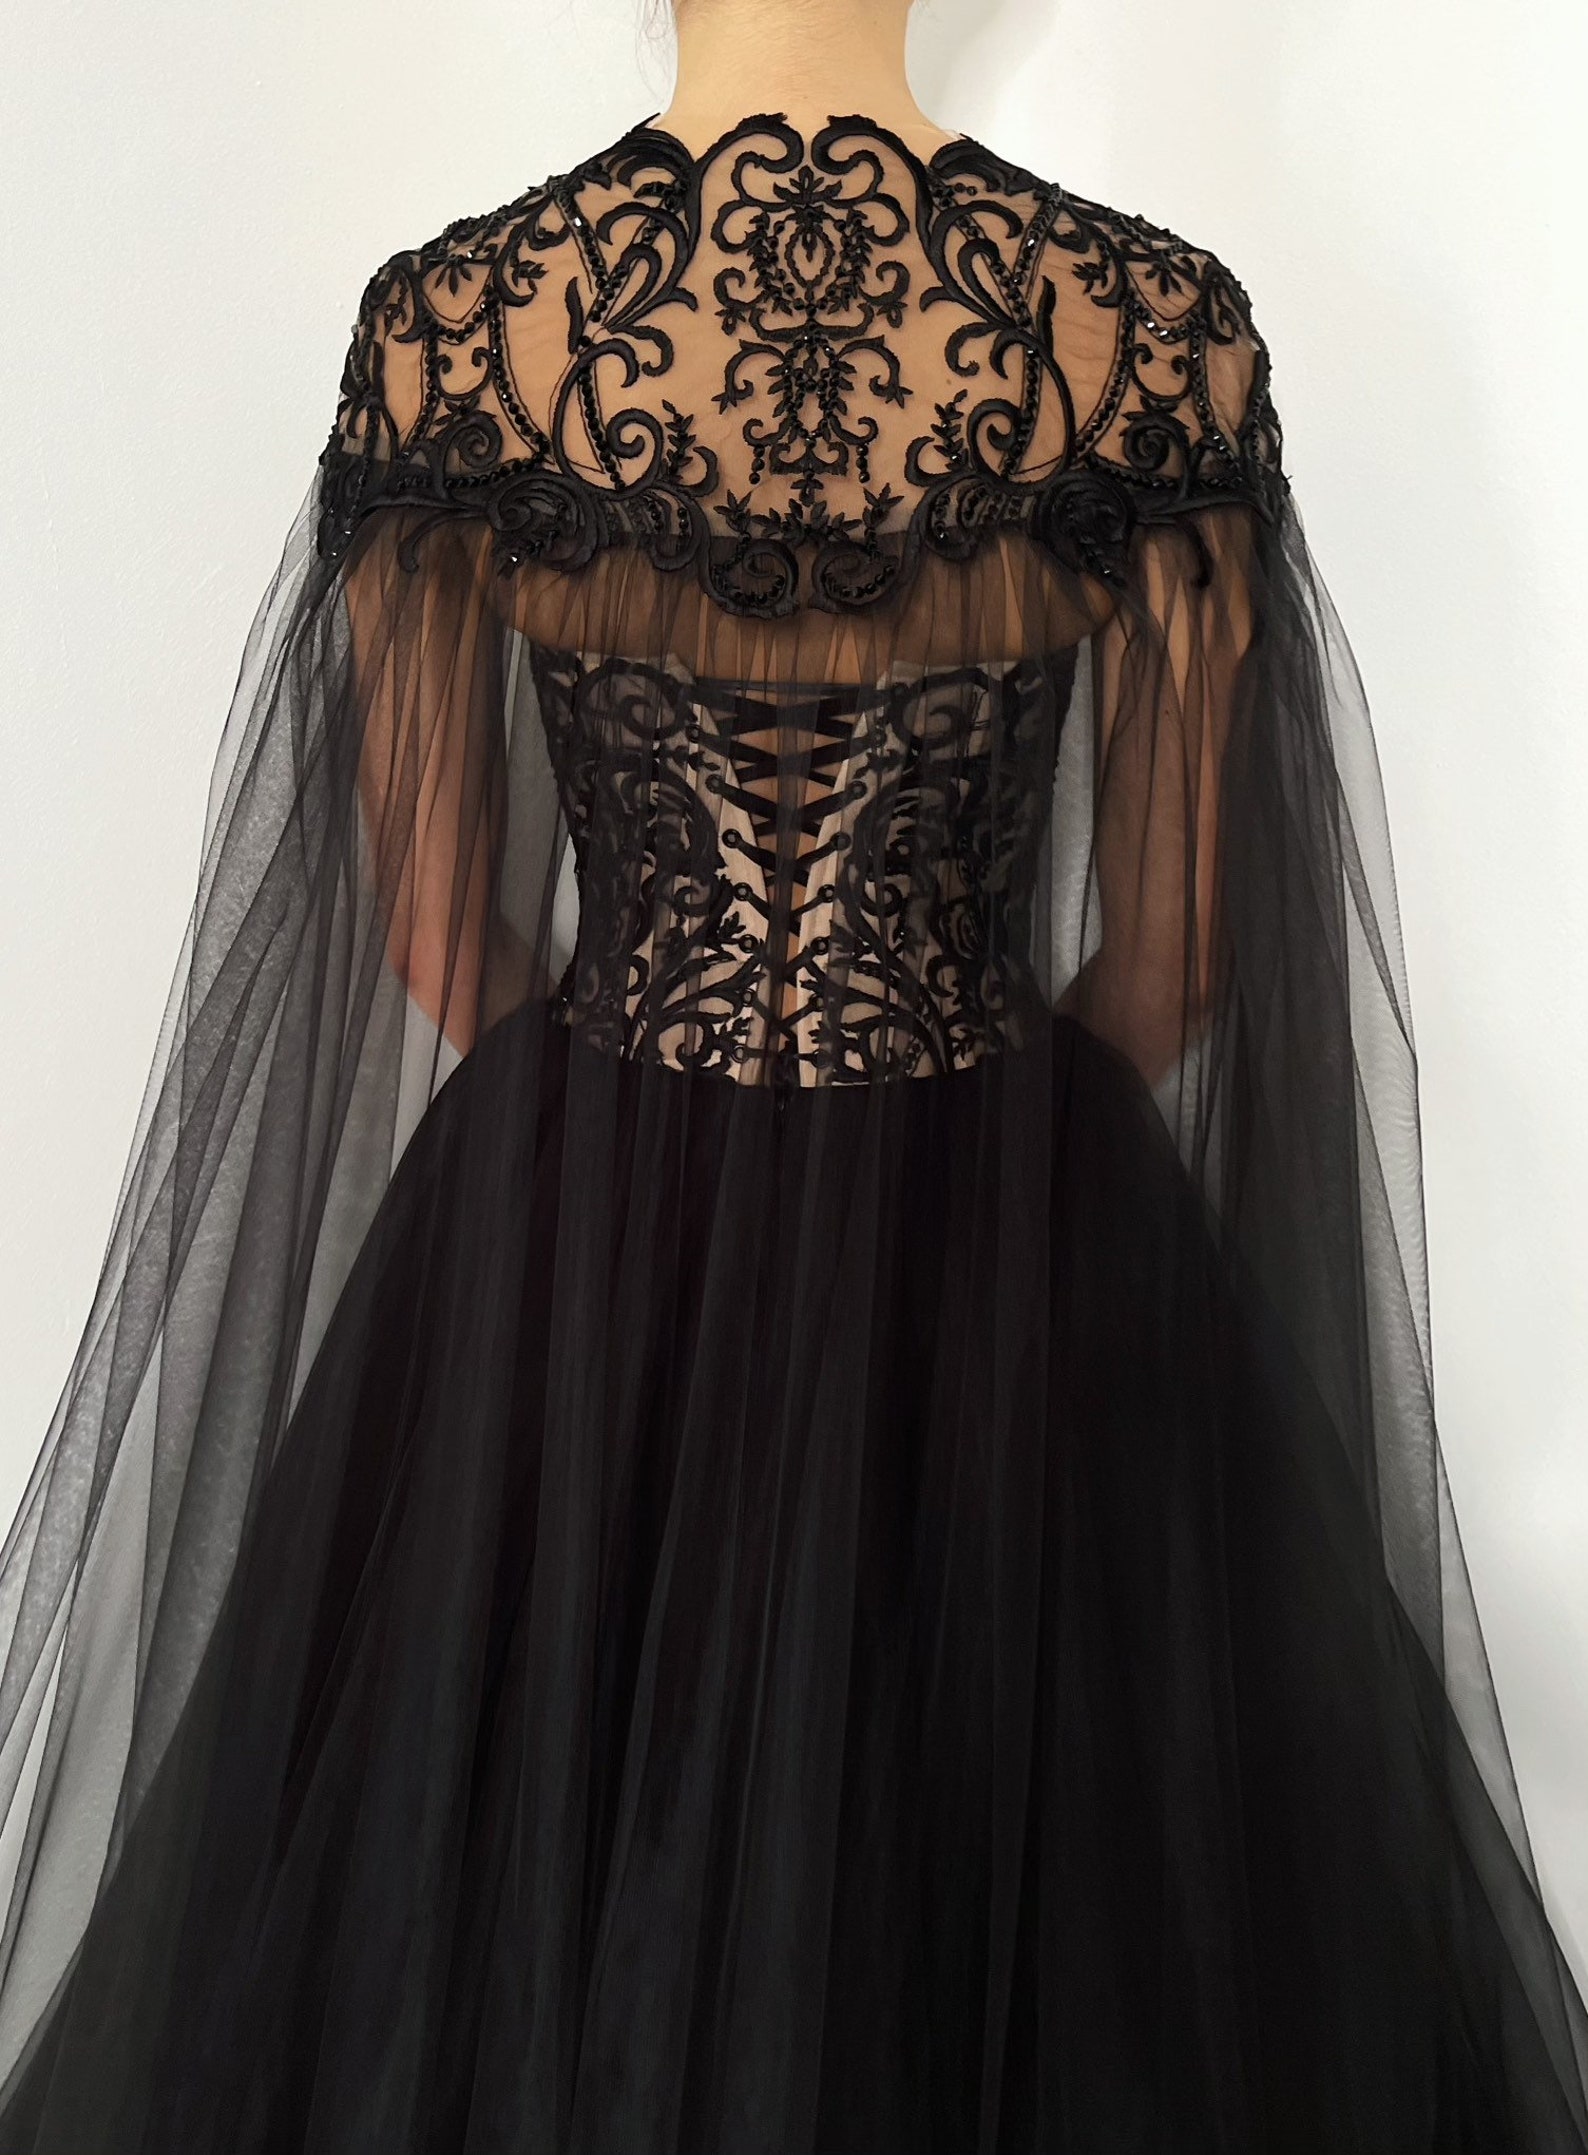 Black and Nude Gothic Beaded Corset Wedding Dress Alternative | Etsy